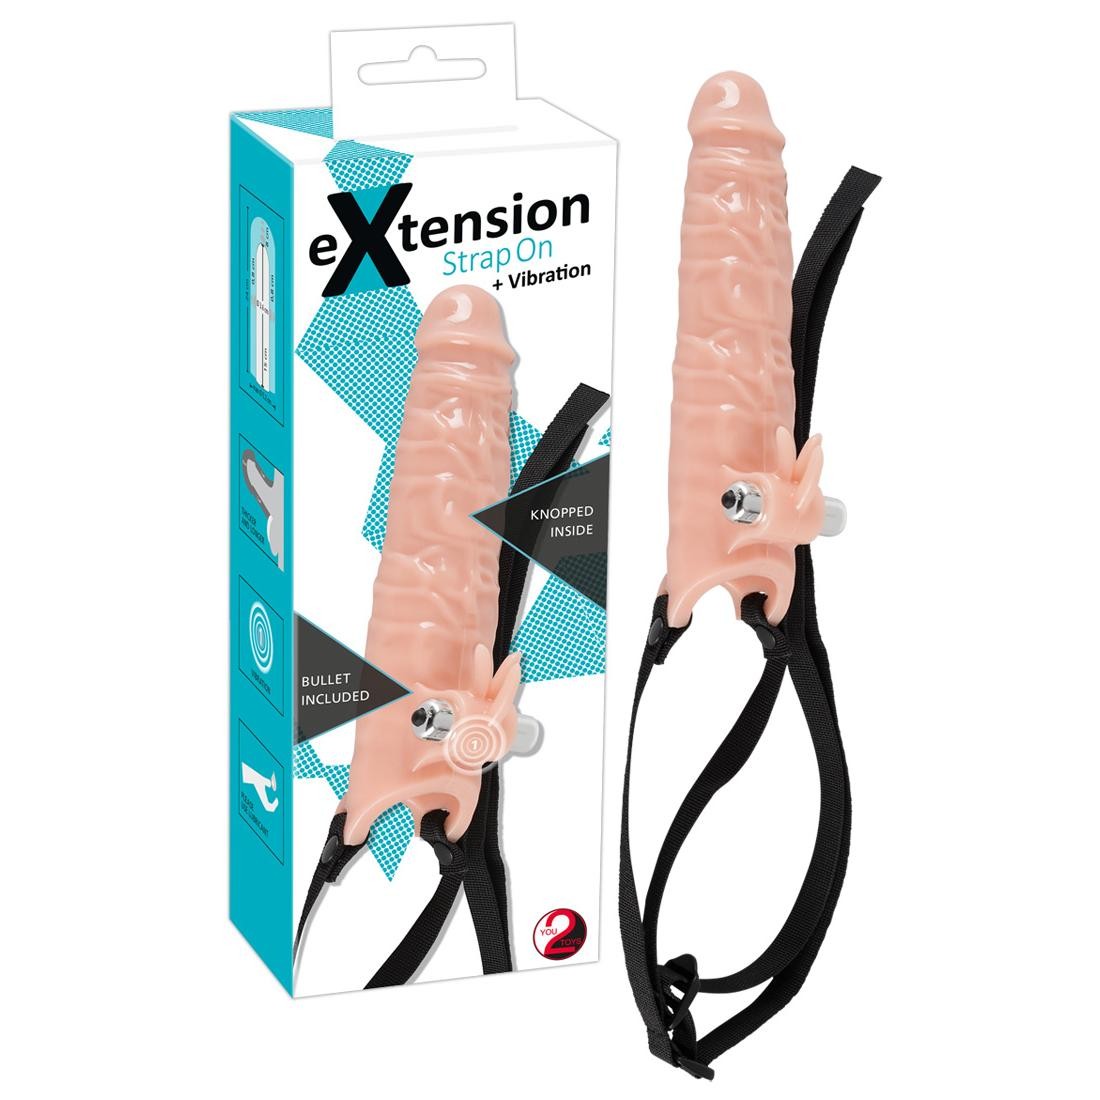  You2Toys  -  Extension  Strap  On  +  Vibration  -  Penishülle  mit  Vibration 